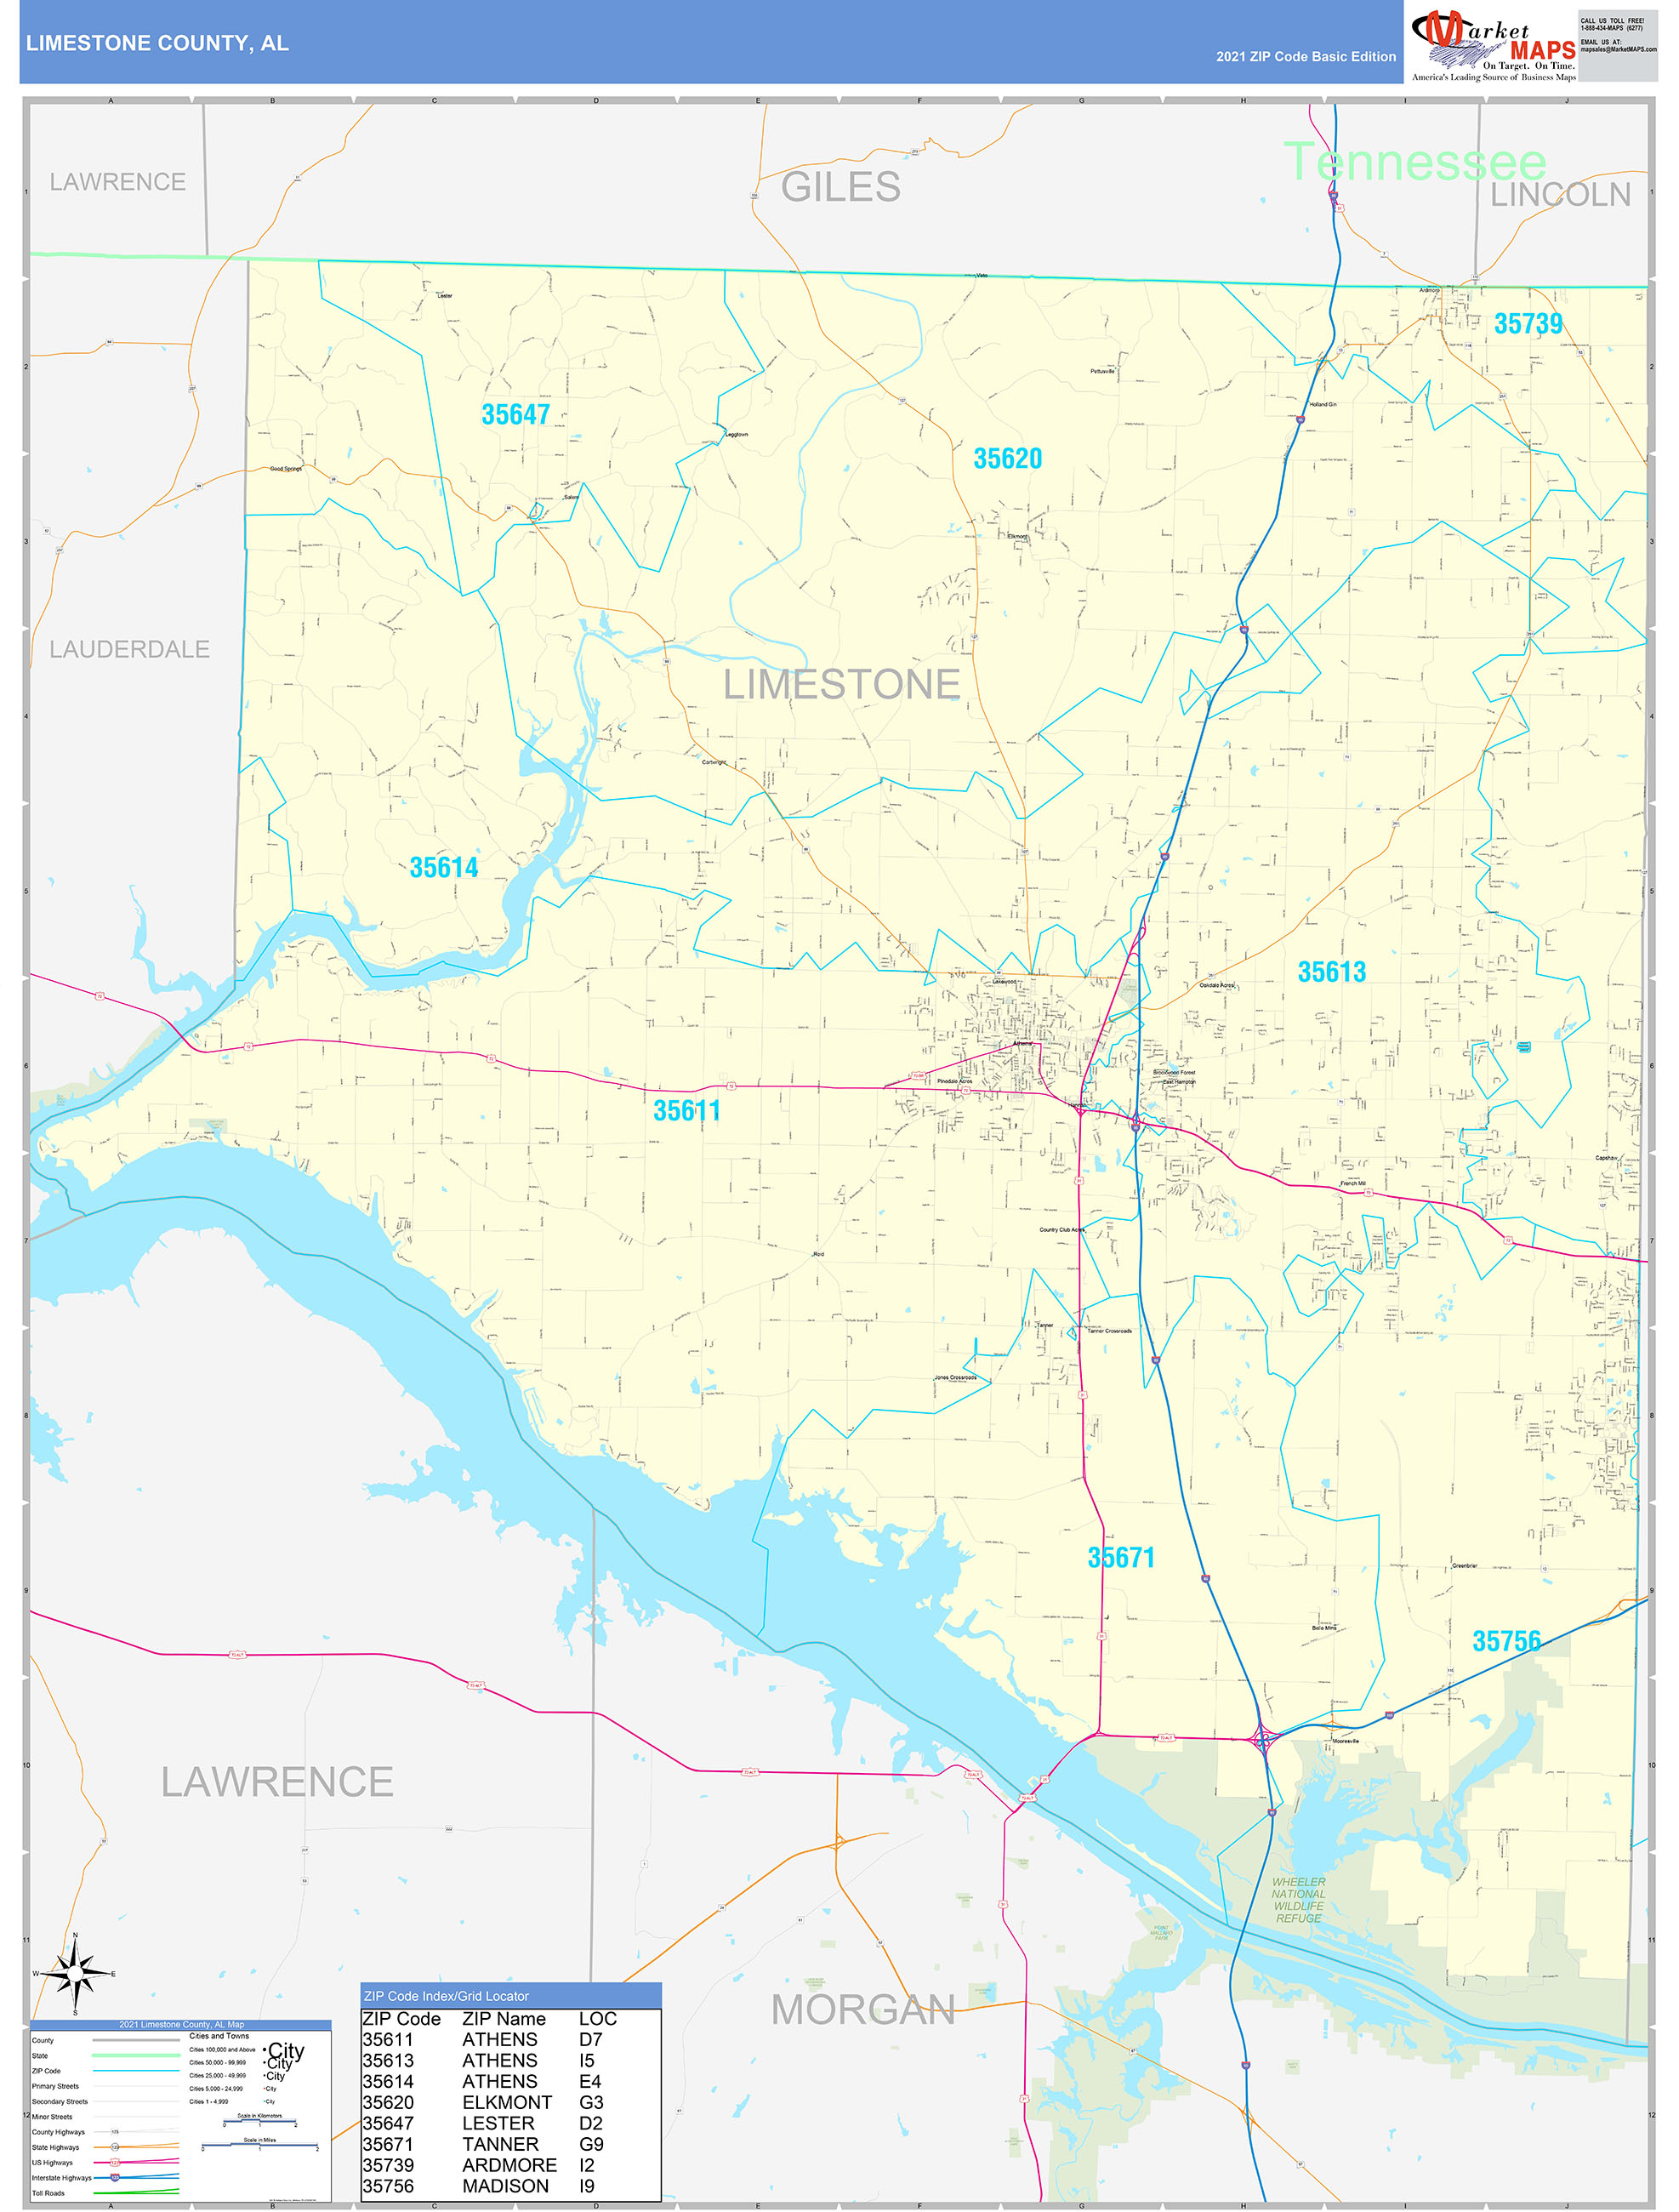 Limestone County, AL Zip Code Wall Map Basic Style by MarketMAPS - MapSales